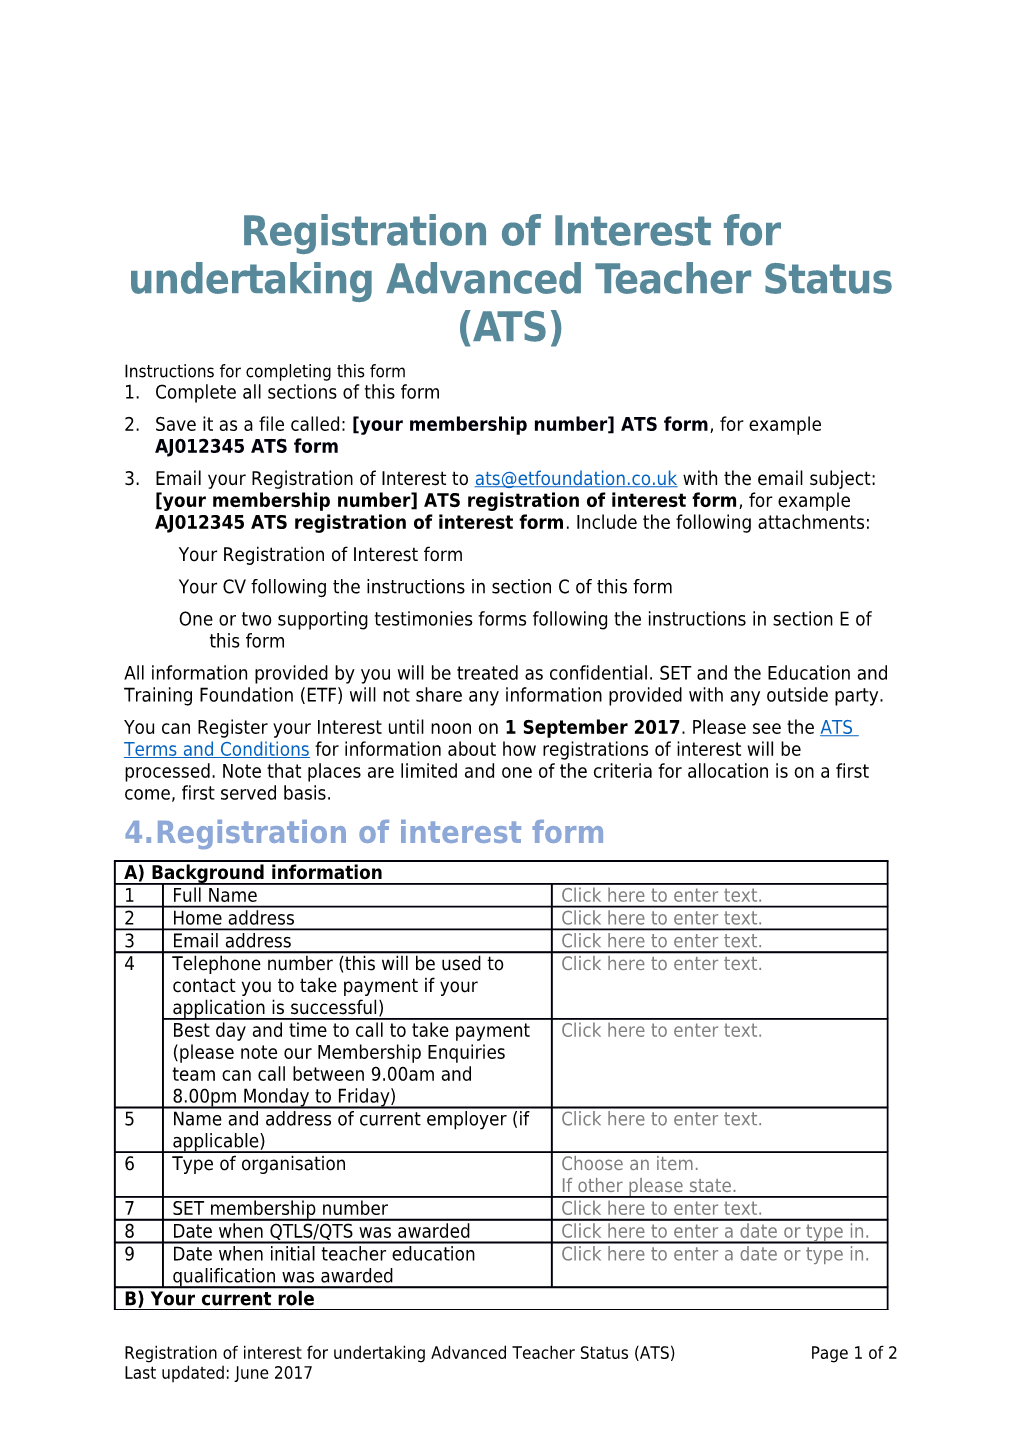 Registration of Interest for Undertaking Advanced Teacher Status (ATS)